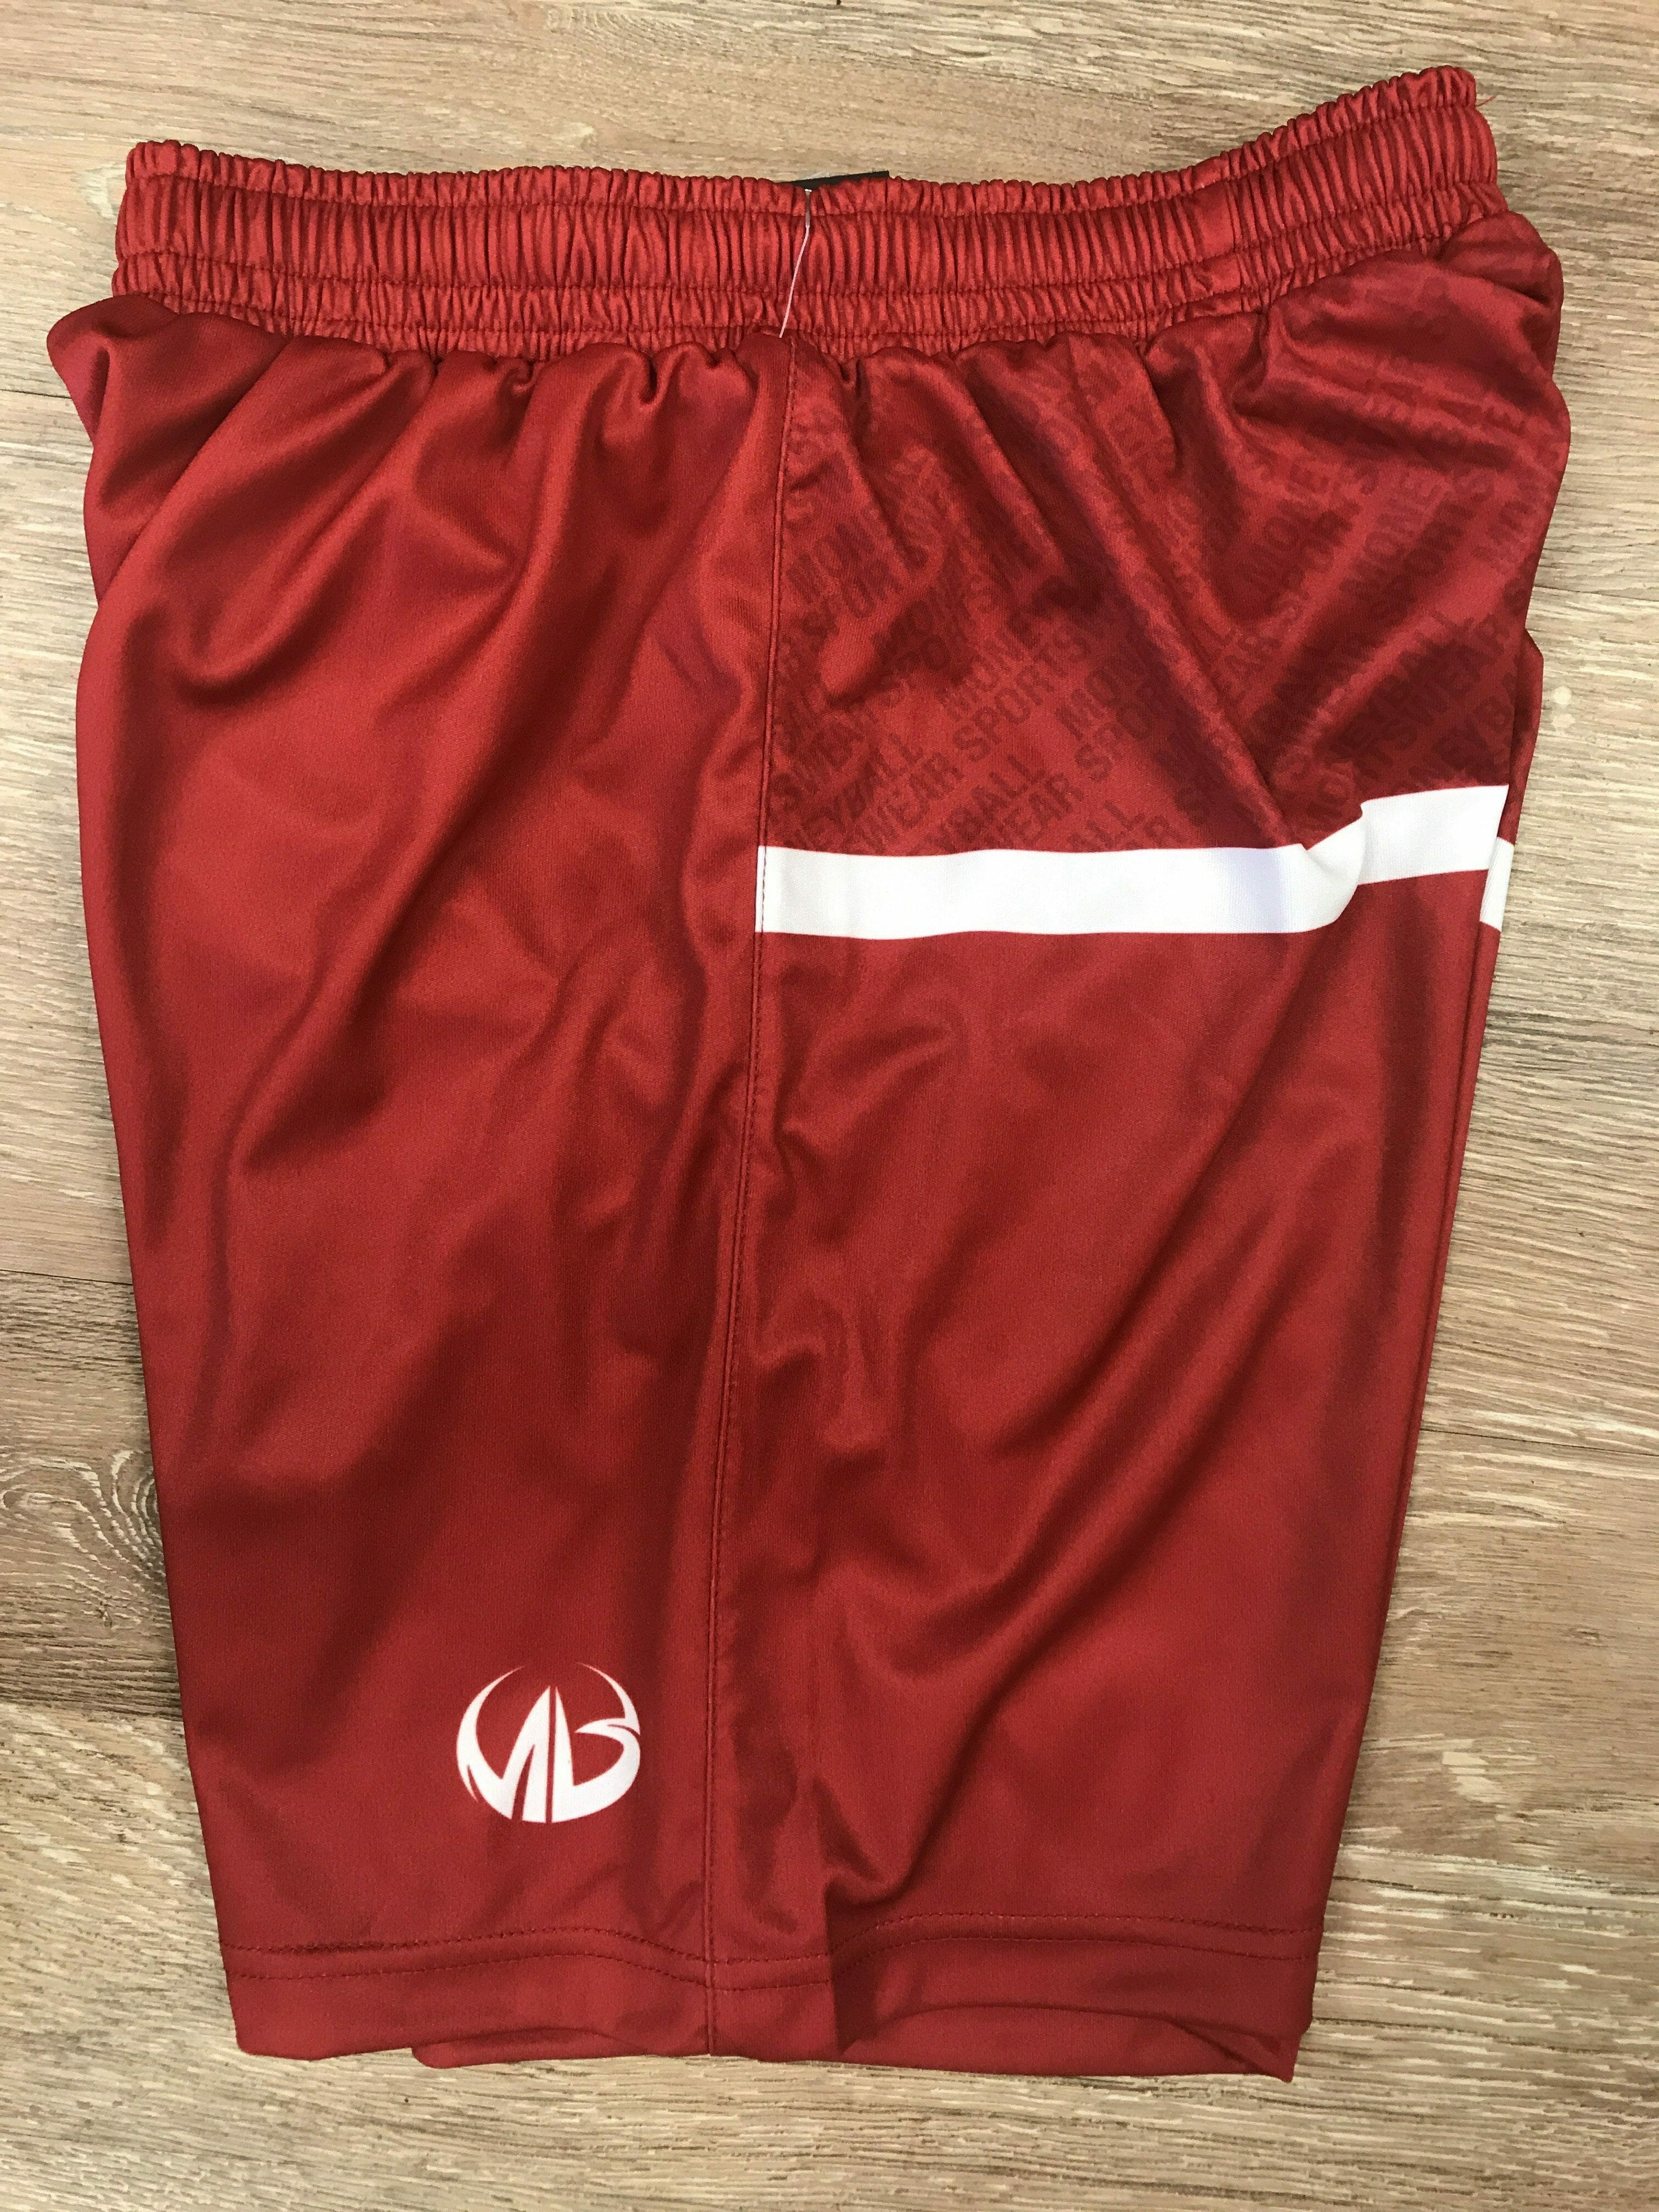 Performance Shorts - Red - Moneyball Sportswear